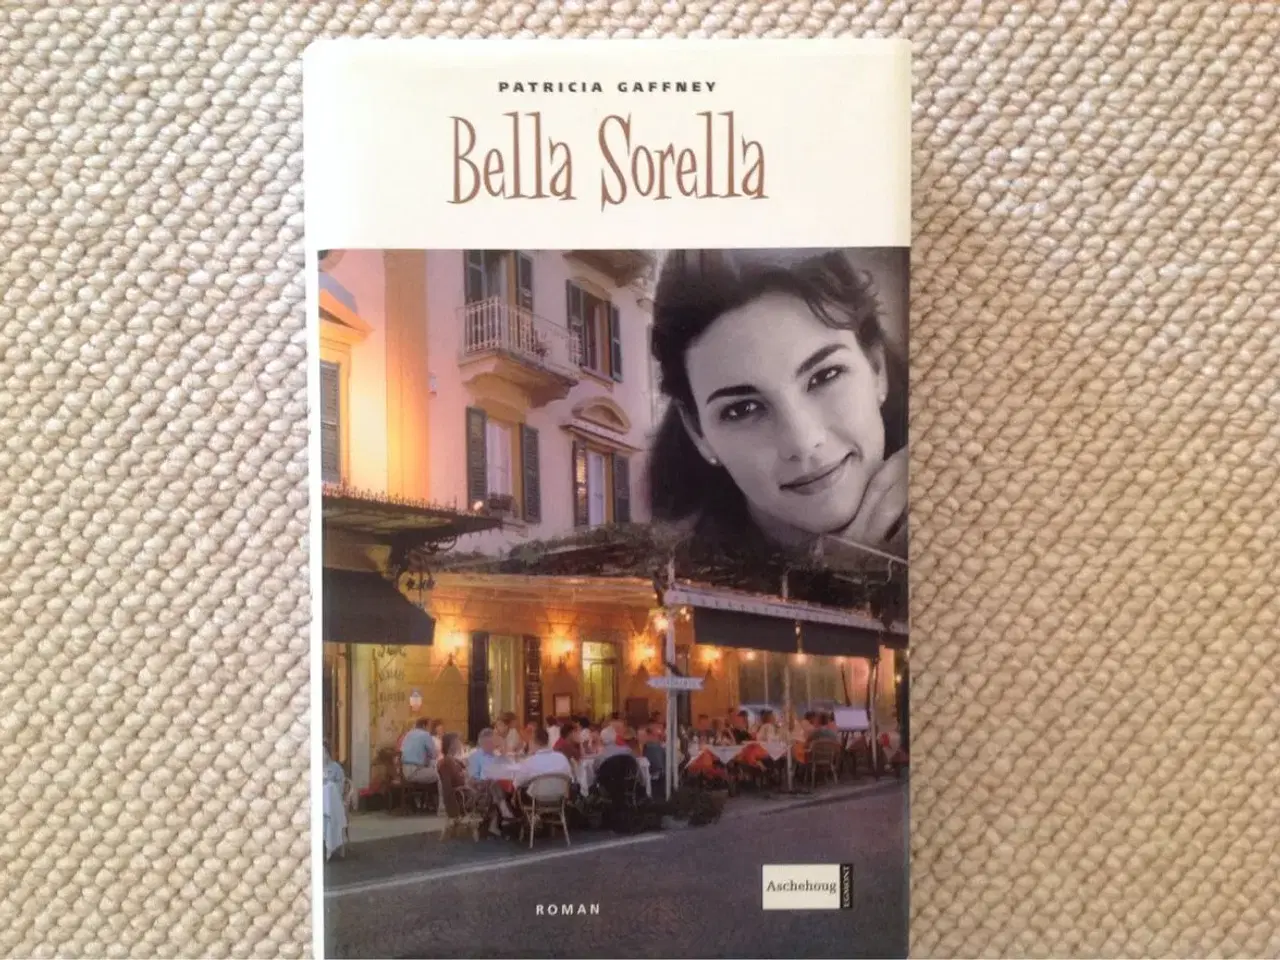 Billede 1 - Bella Sorella" af Patricia Gaffney